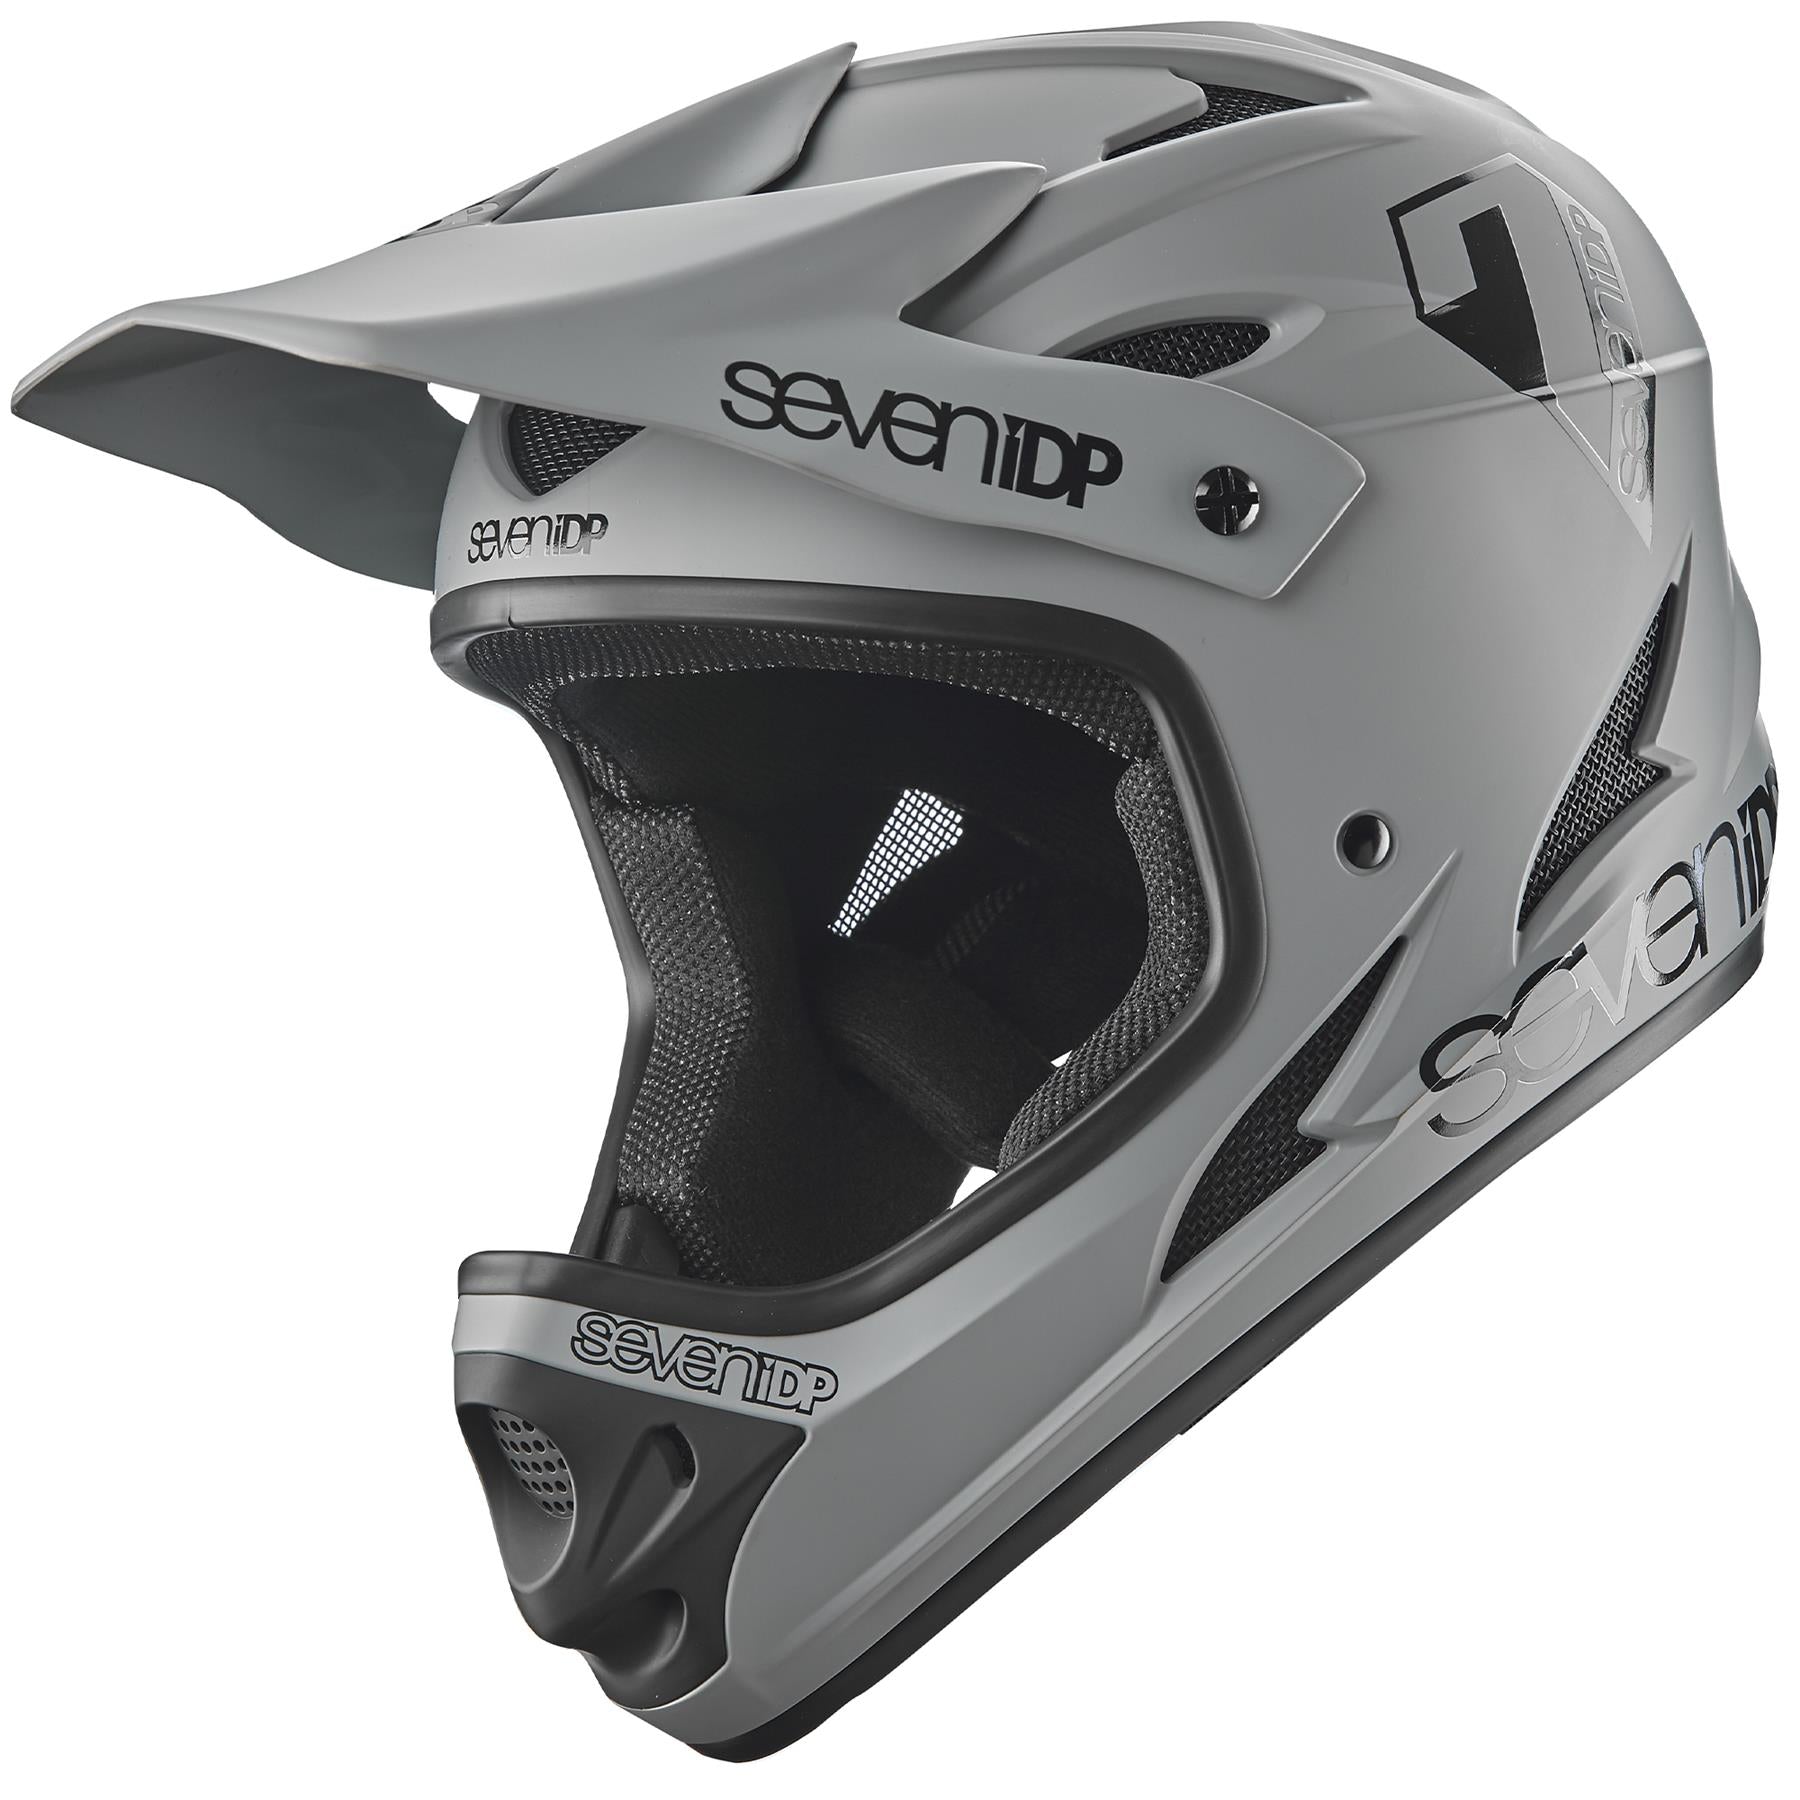 Seven iDP M1 Helmet Youth Race - Gray